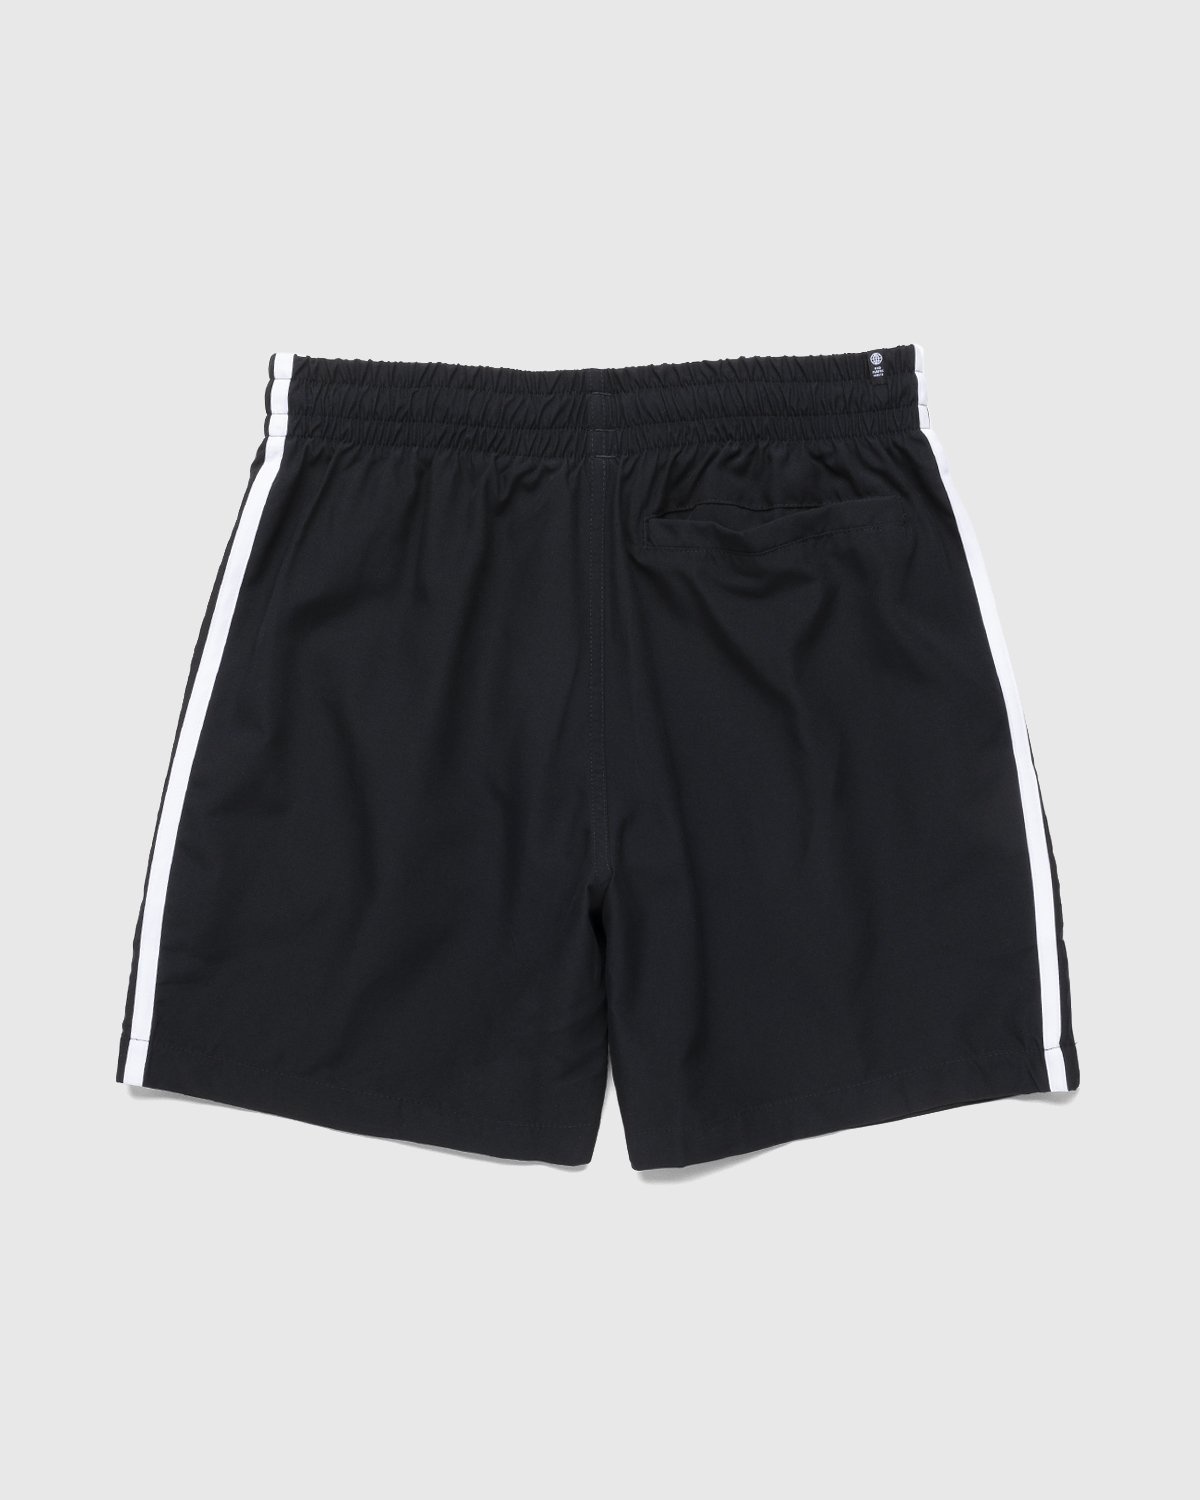 Adidas – adicolor Classics 3-Stripes Swim Shorts Black - Swim Shorts - Black - Image 2